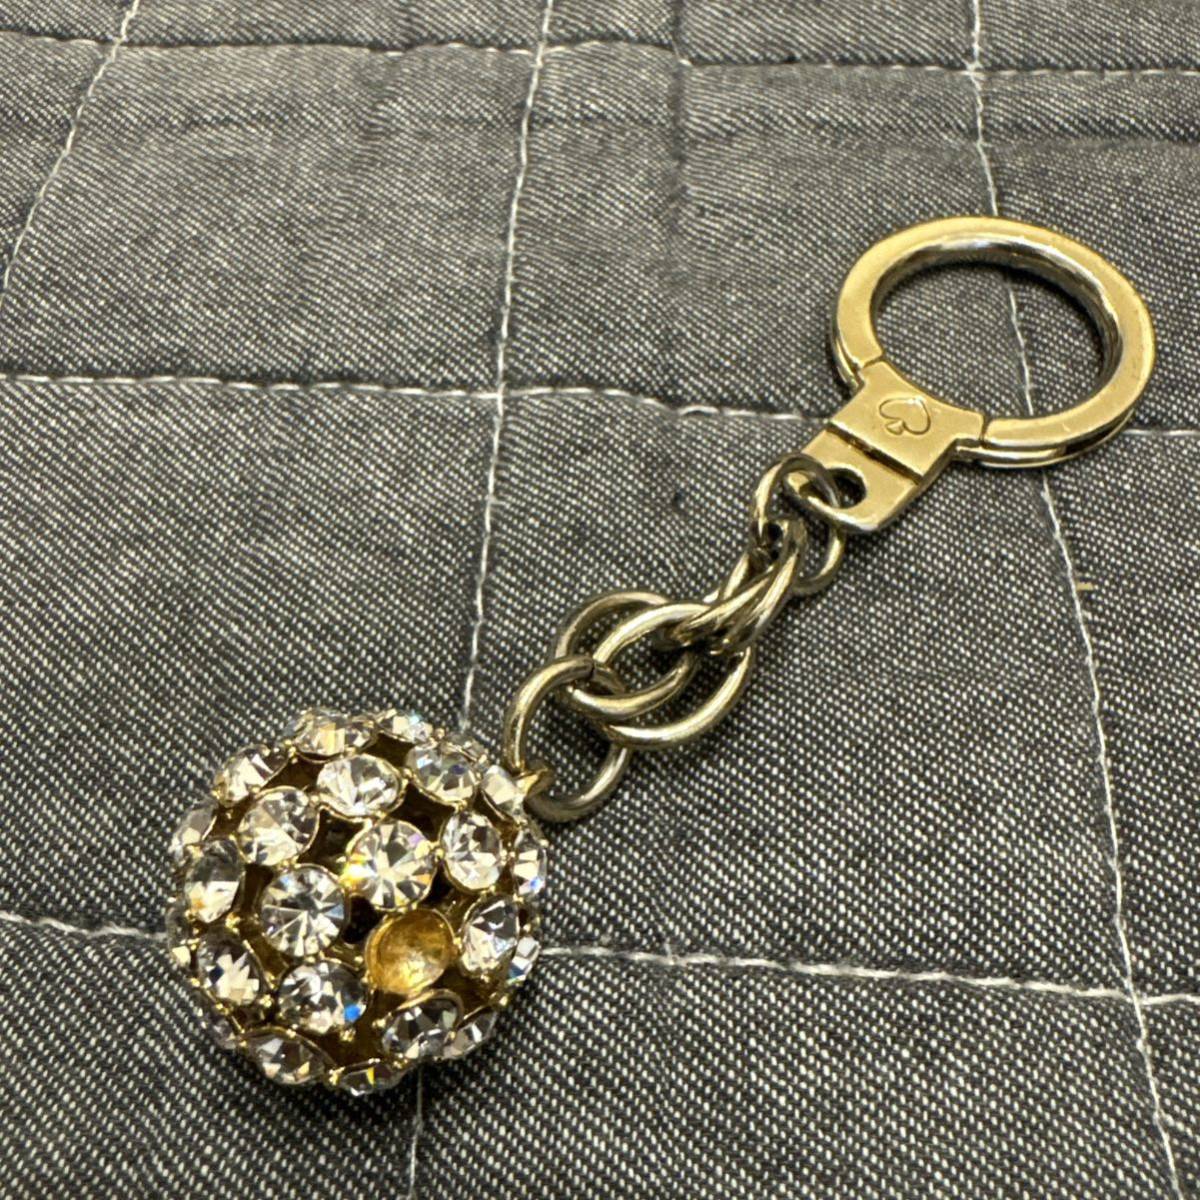 KATE SPADE NEW YORK Kate Spade New York rhinestone Crystal Ball key holder bag charm 